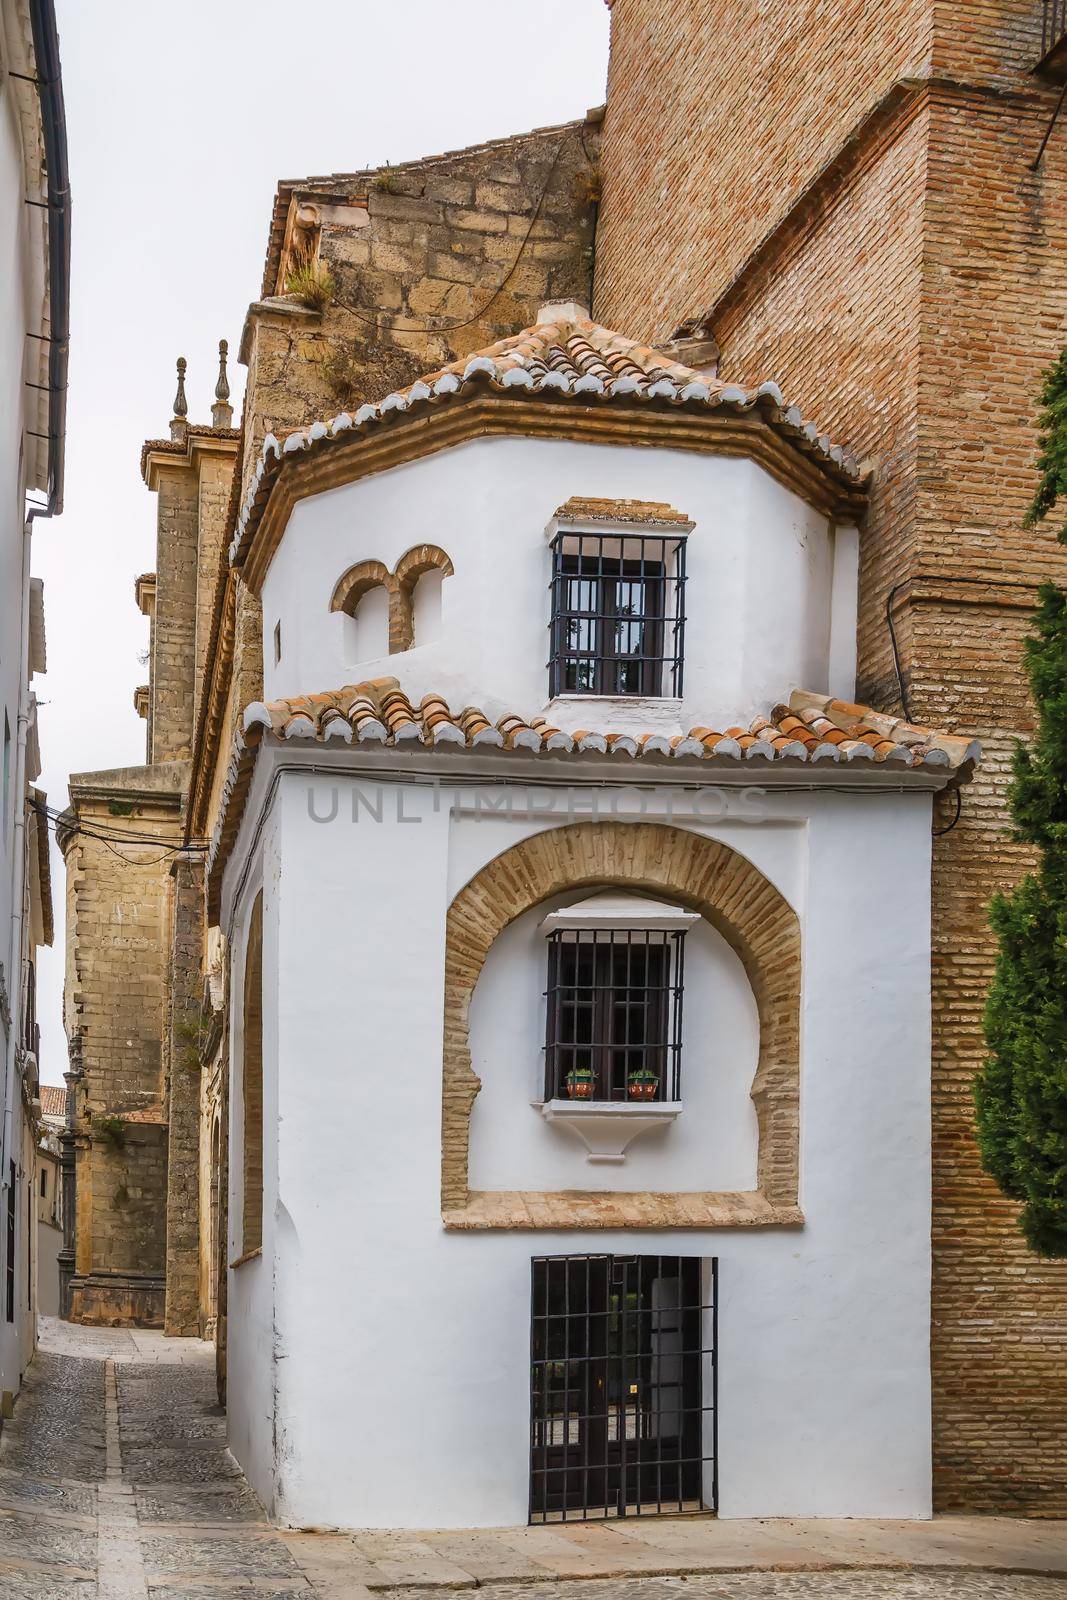 House in Ronda, Spain by borisb17